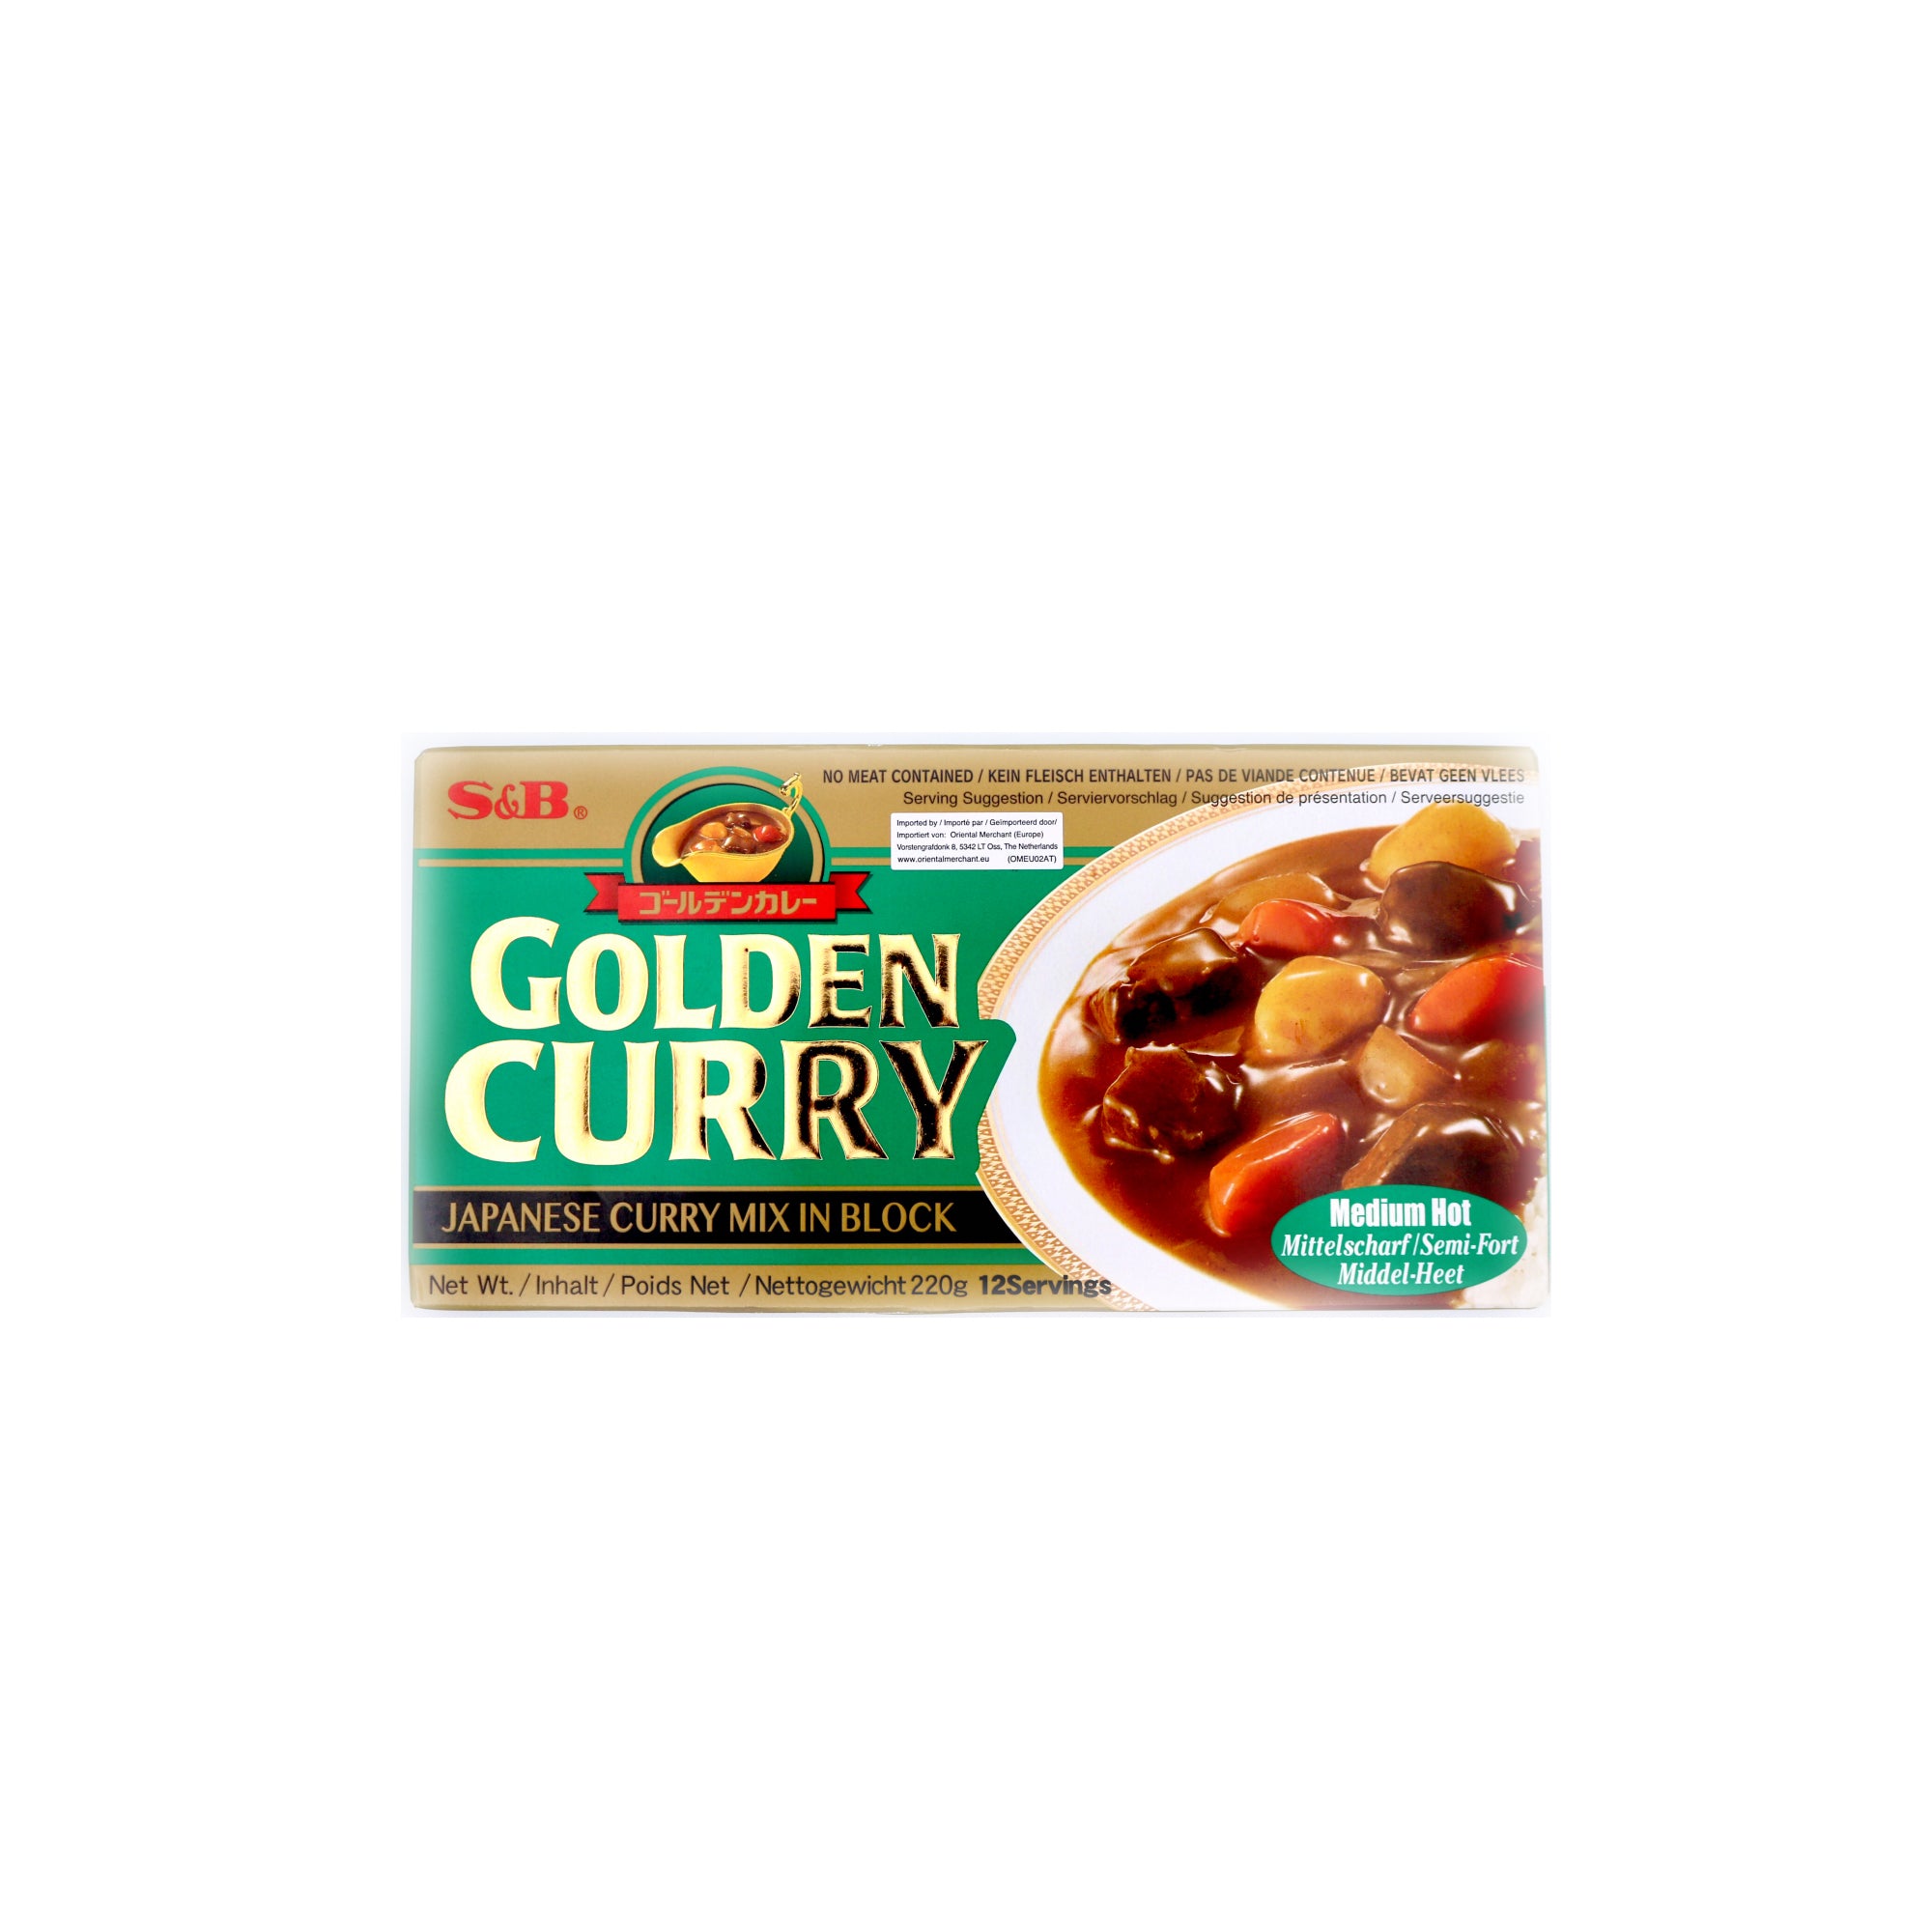 S&B, Golden Curry Japanese curry Mix, Medium Hot, Maroc